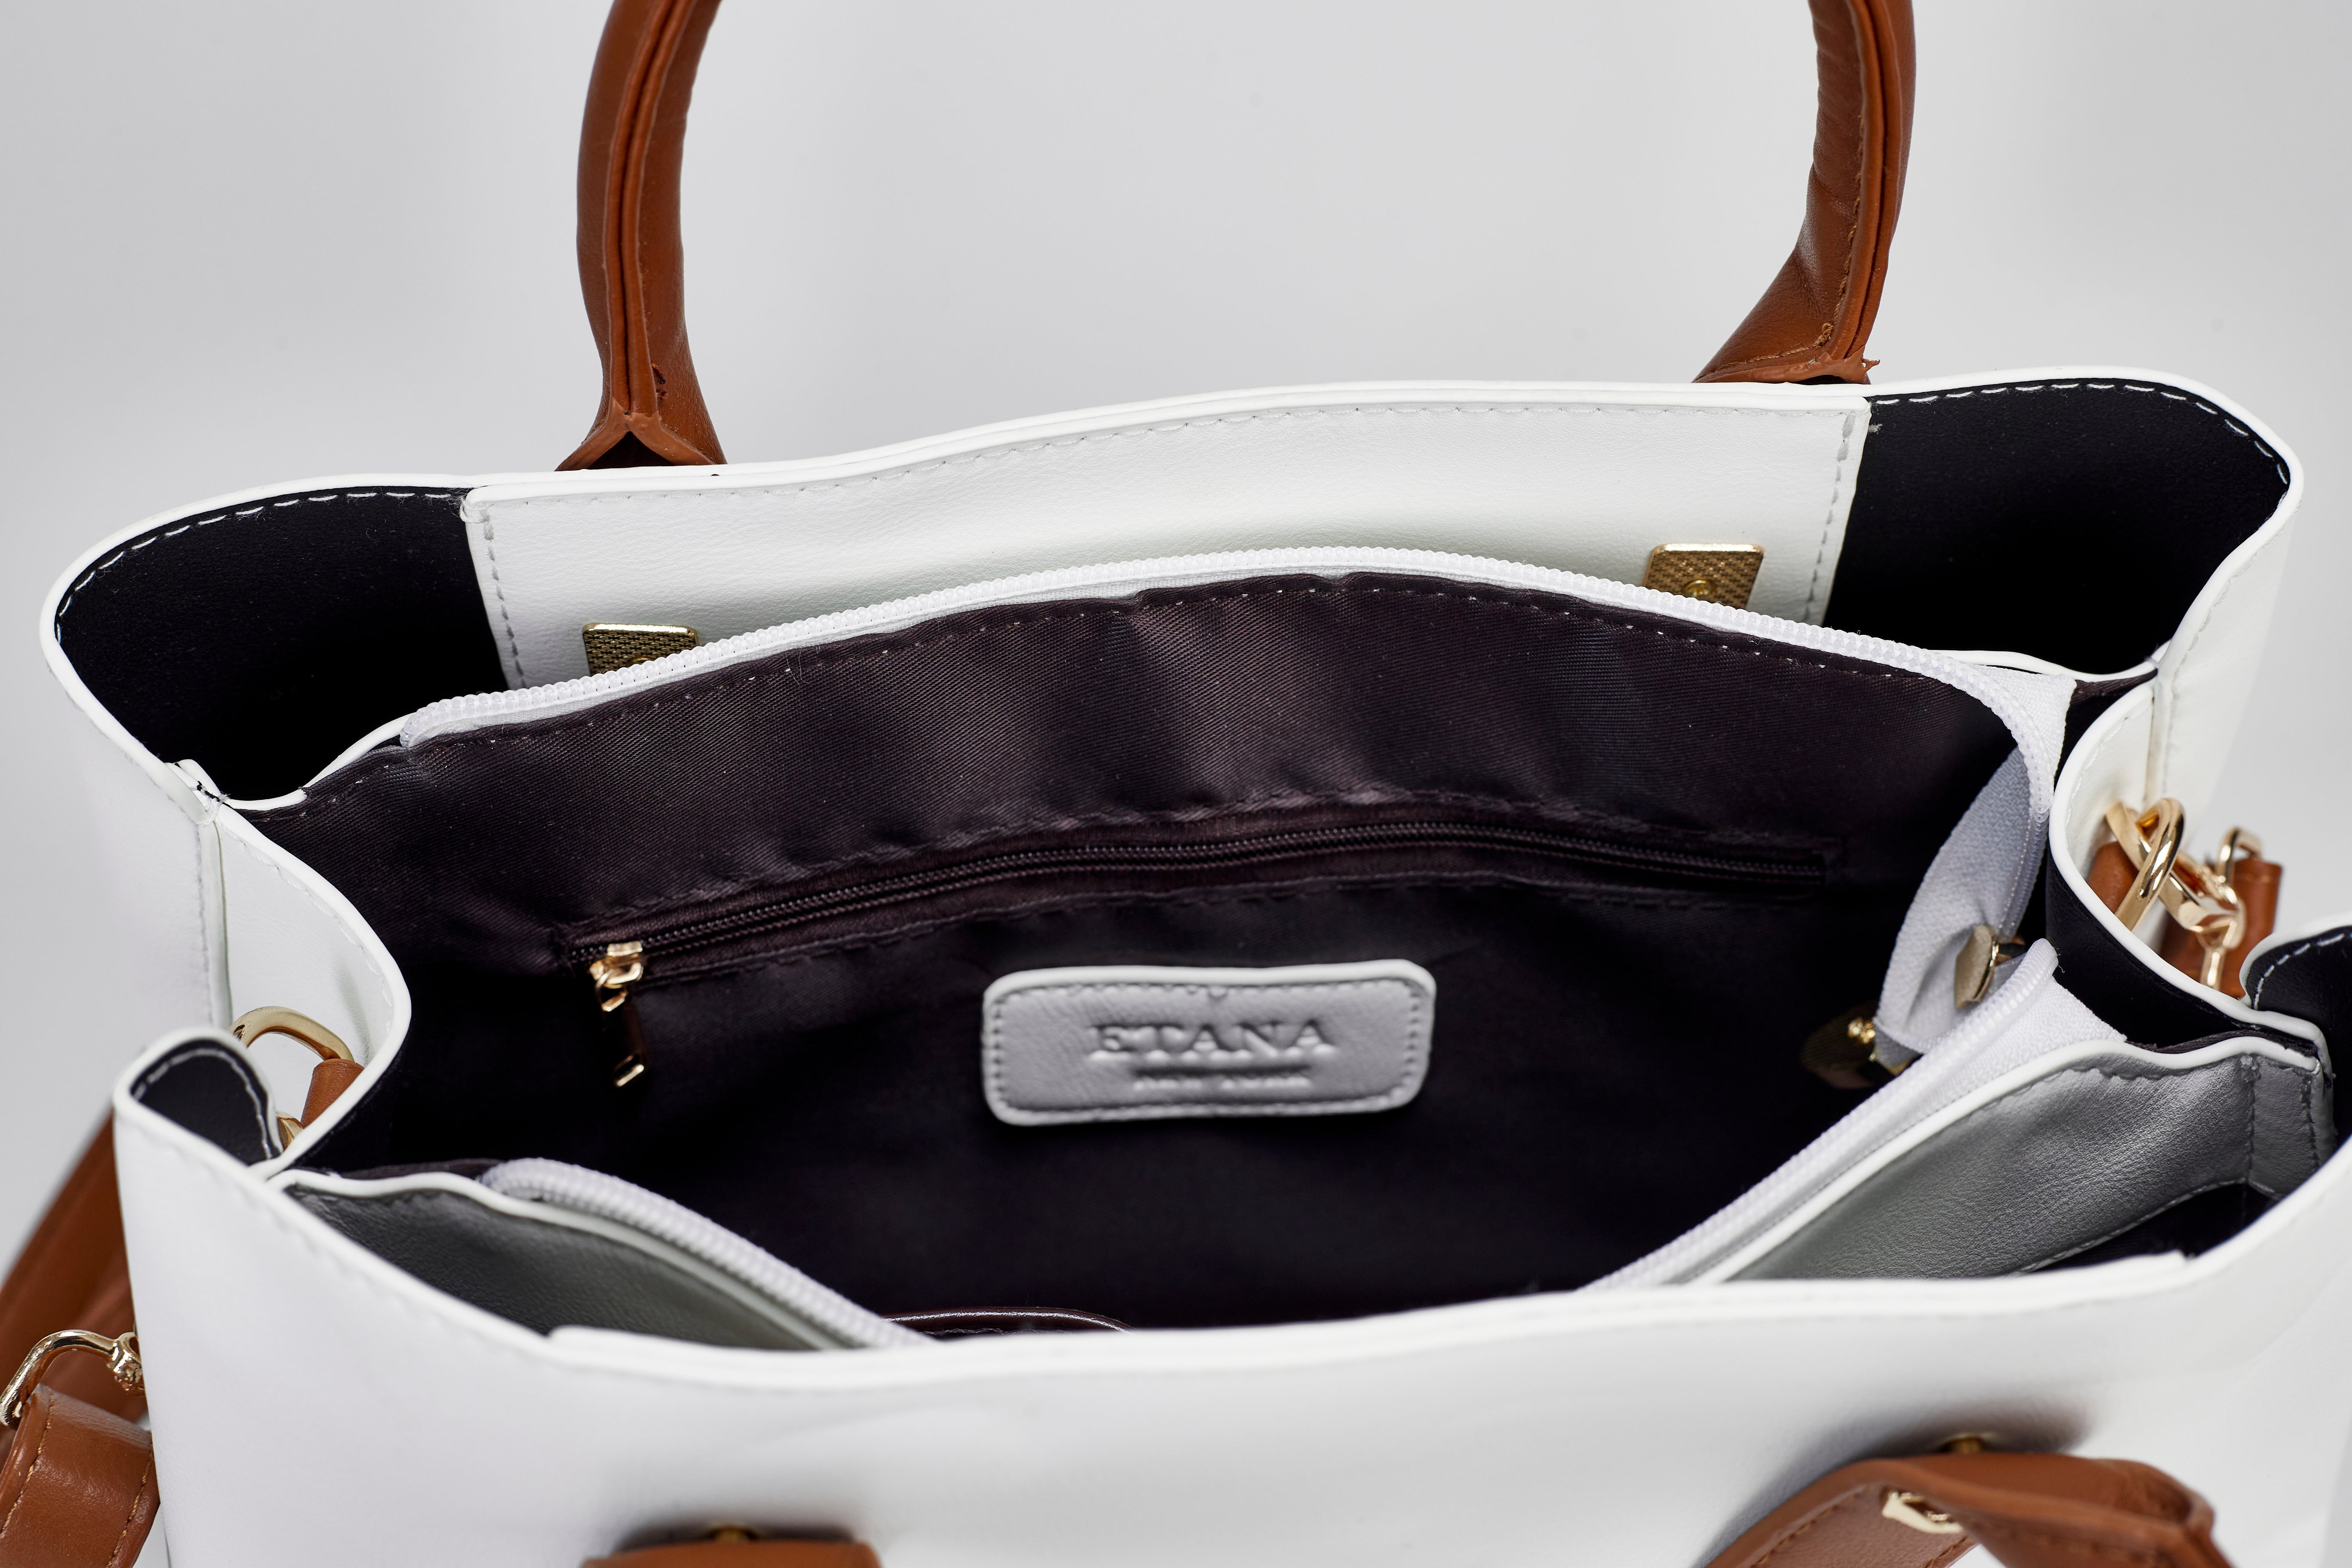 ladies hand bag : Amazon.in: Shoes & Handbags